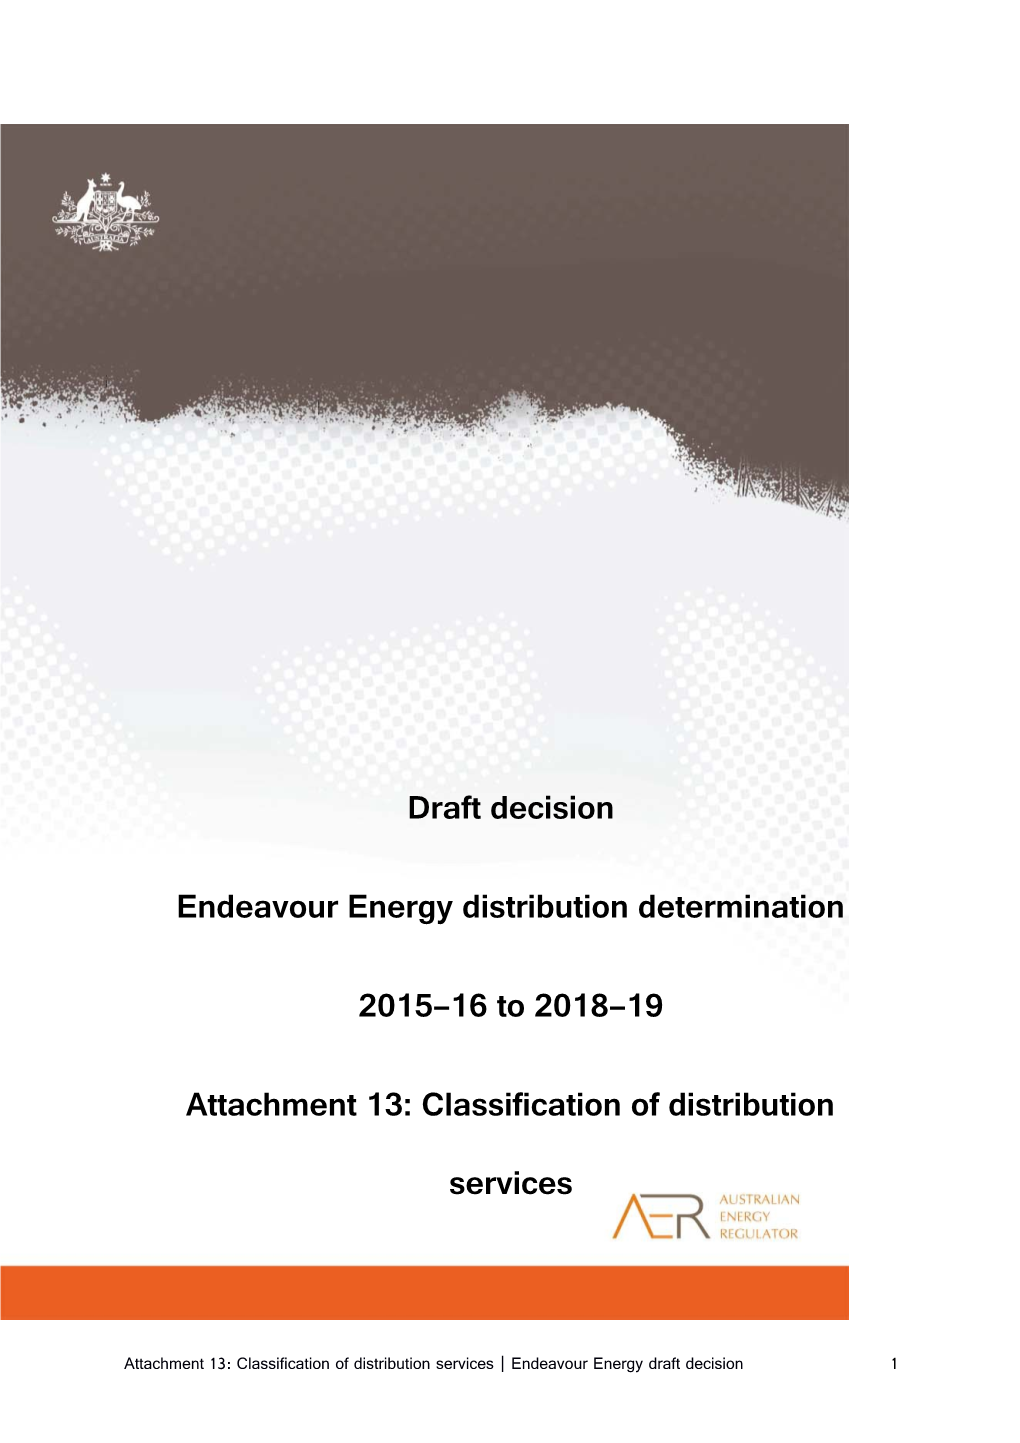 Endeavour Energy Distribution Determination s1